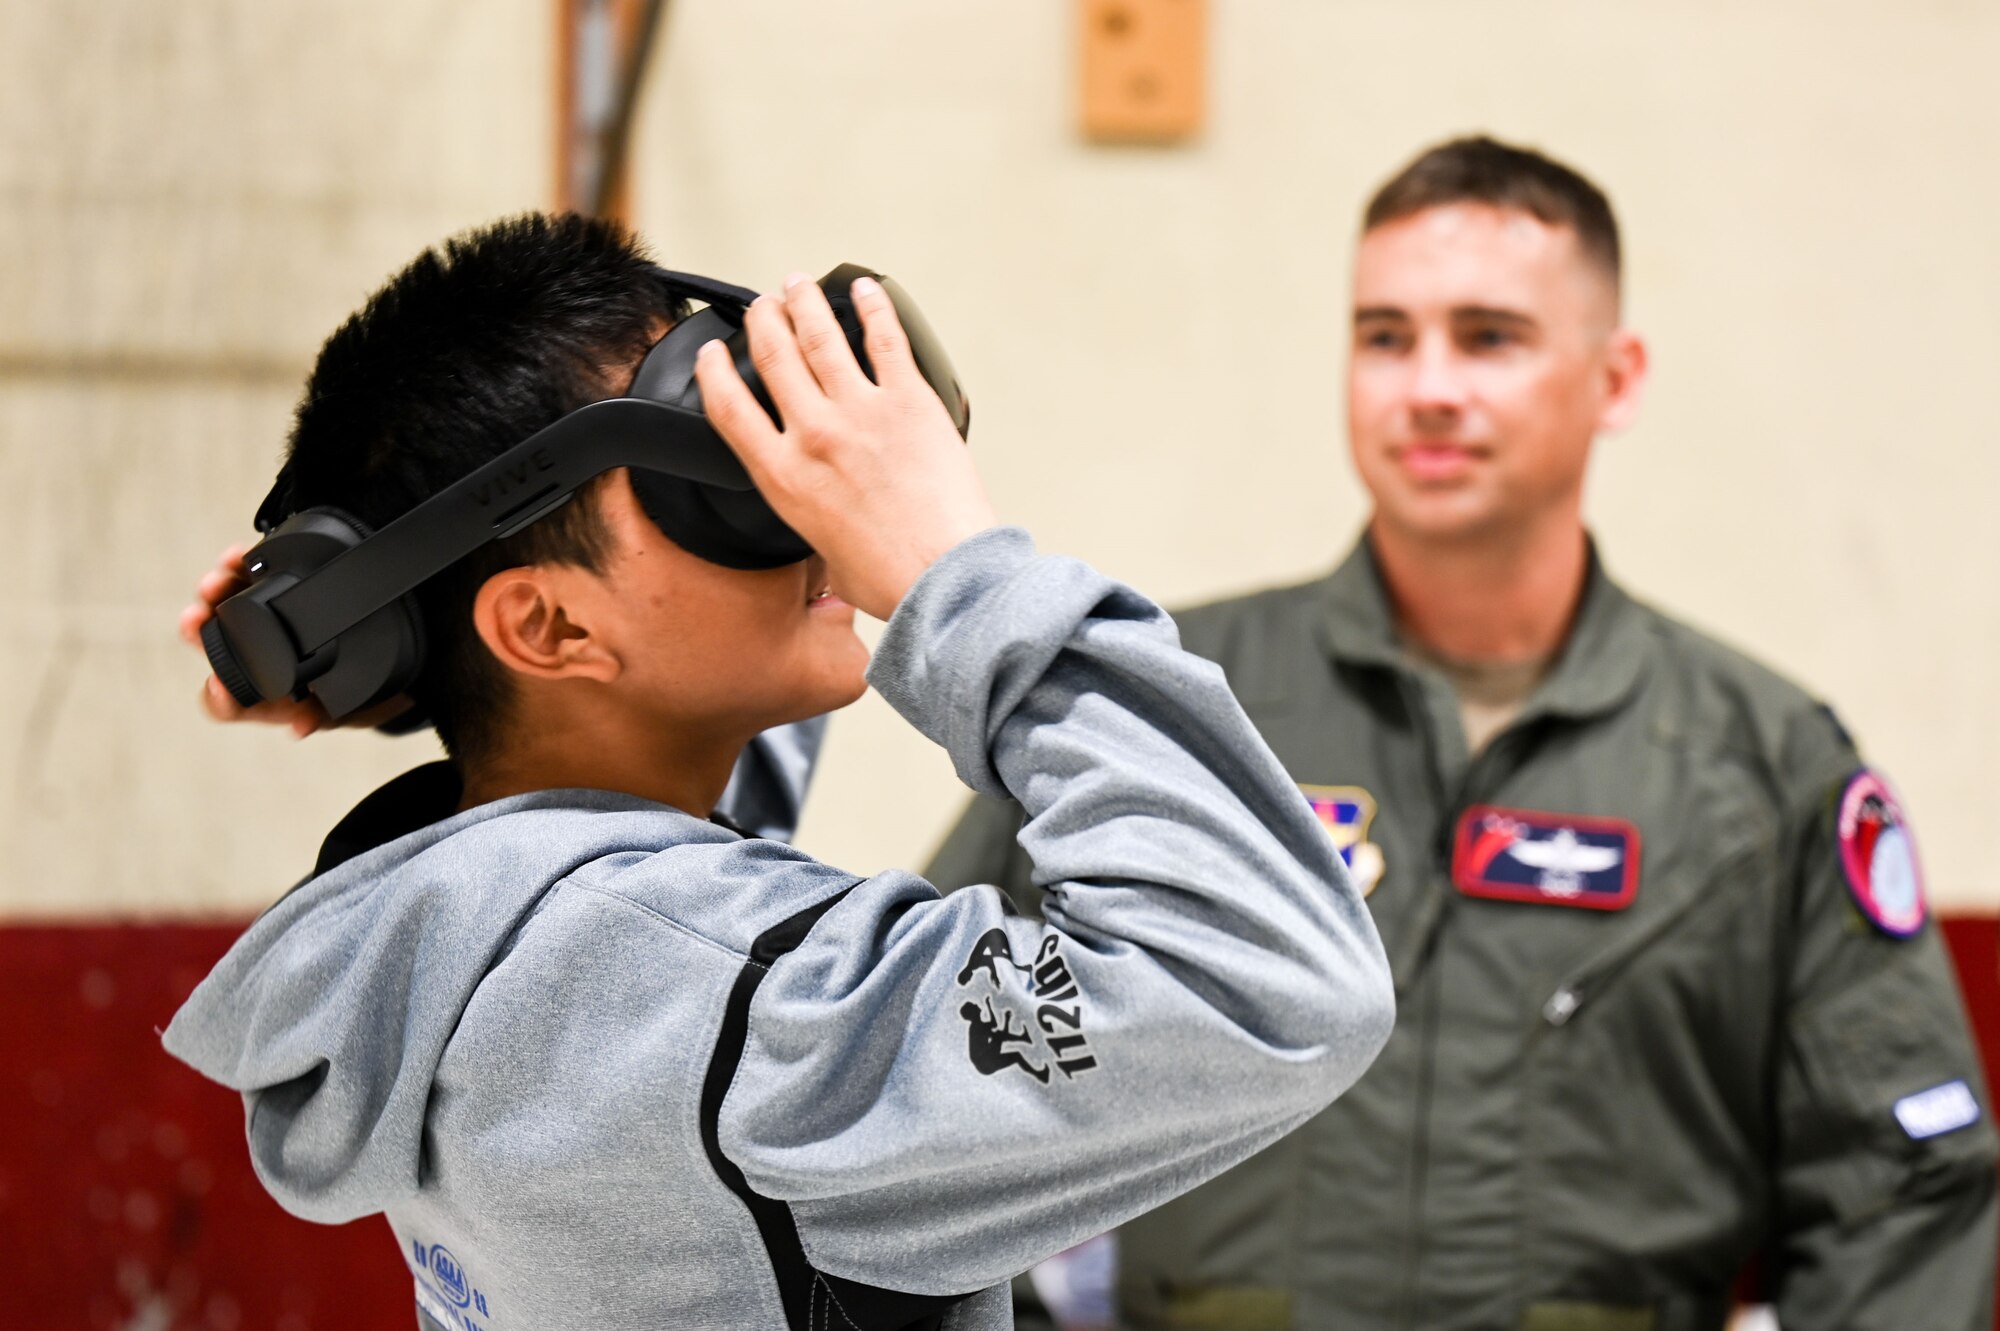 High school boy in grey sweatshirt looks through VR goggles while man in flight suite helps run the program